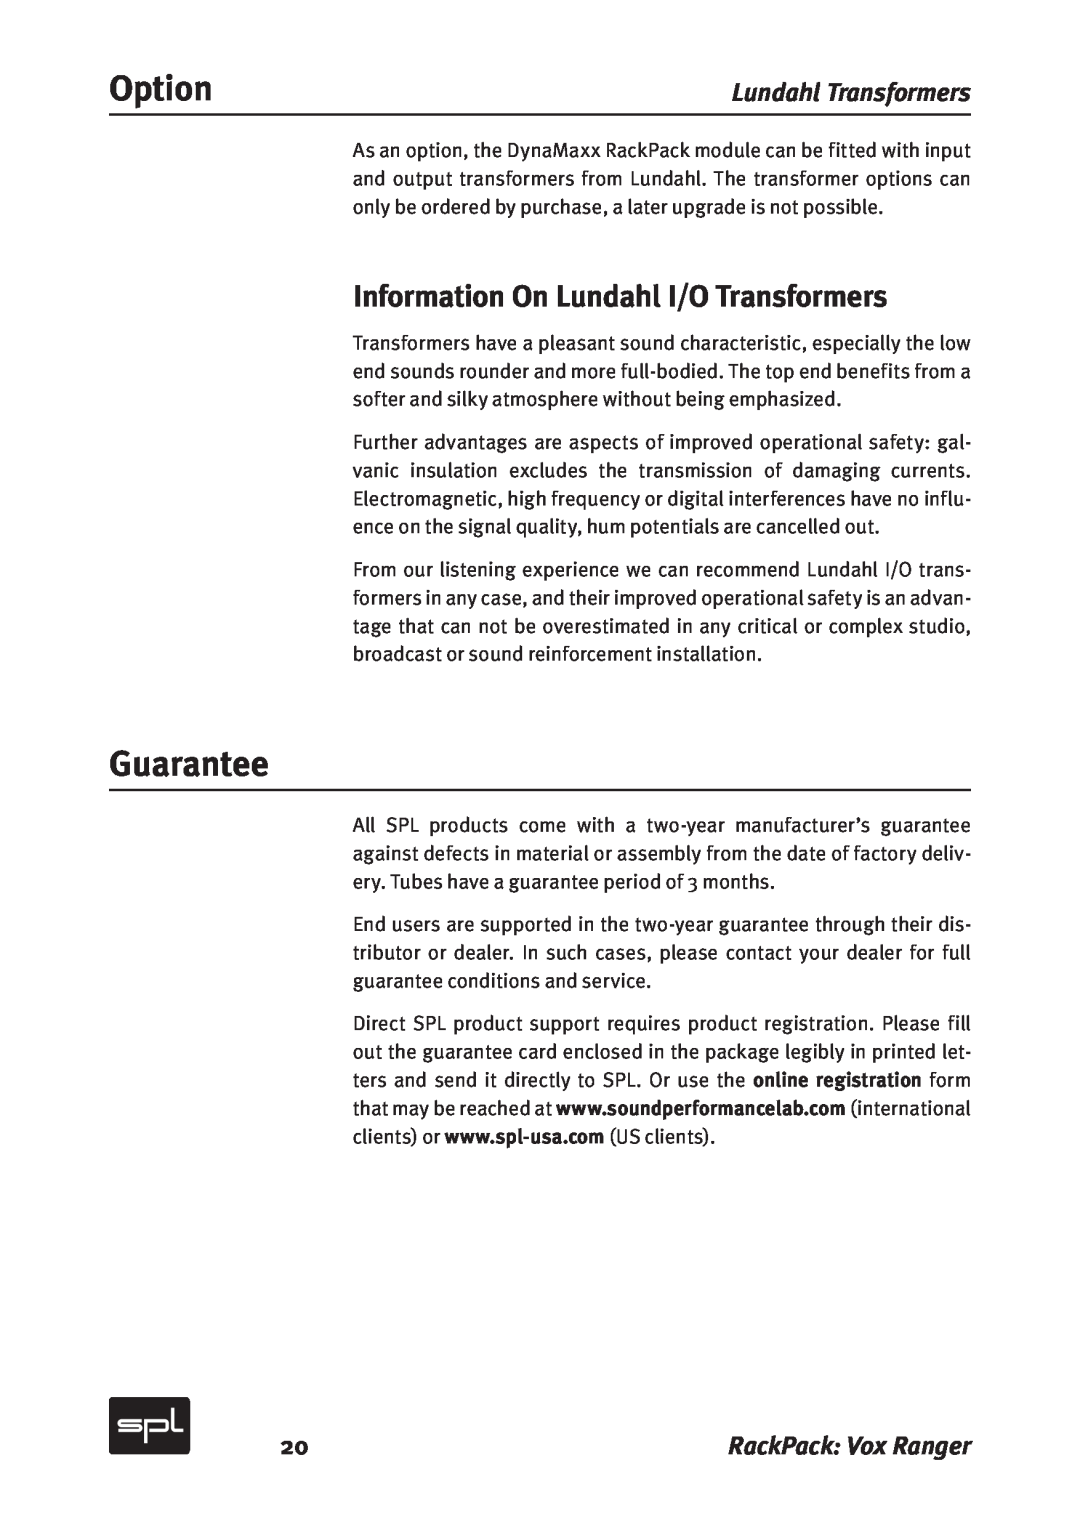 Sound Performance Lab 2718 manual Option, Guarantee, Information On Lundahl I/O Transformers, Lundahl Transformers 